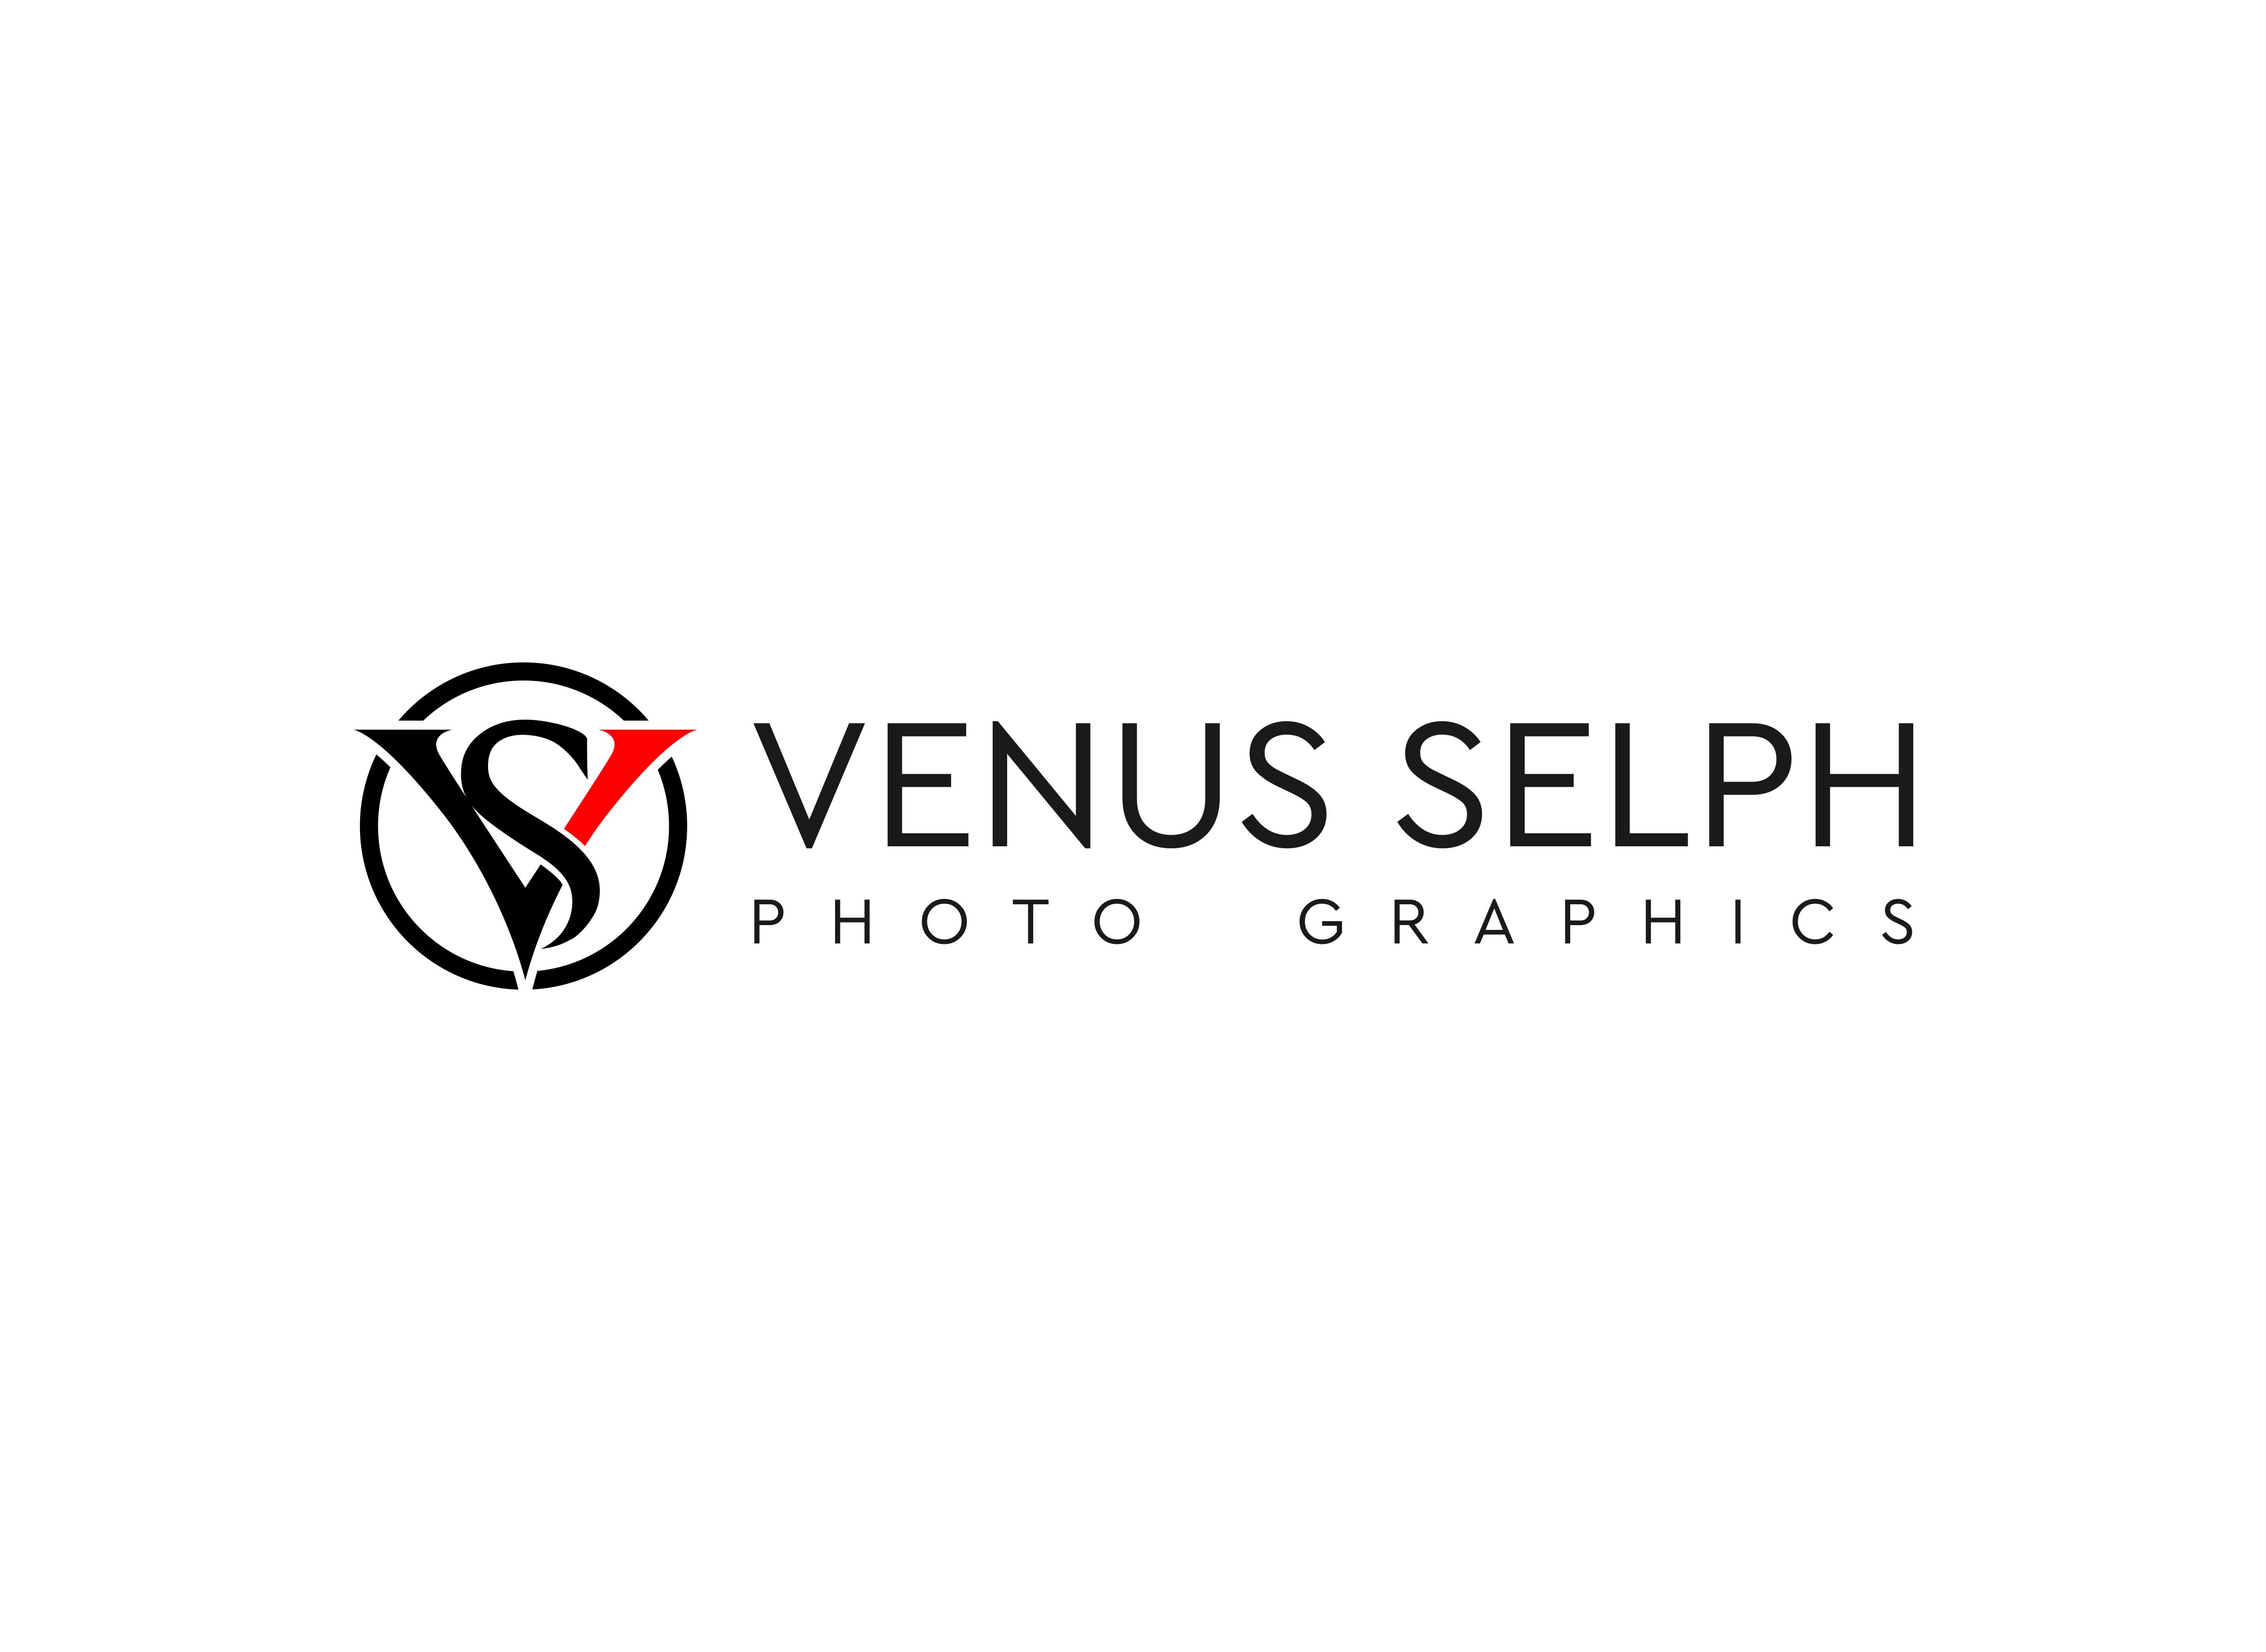 Venus Selph Photo Graphics